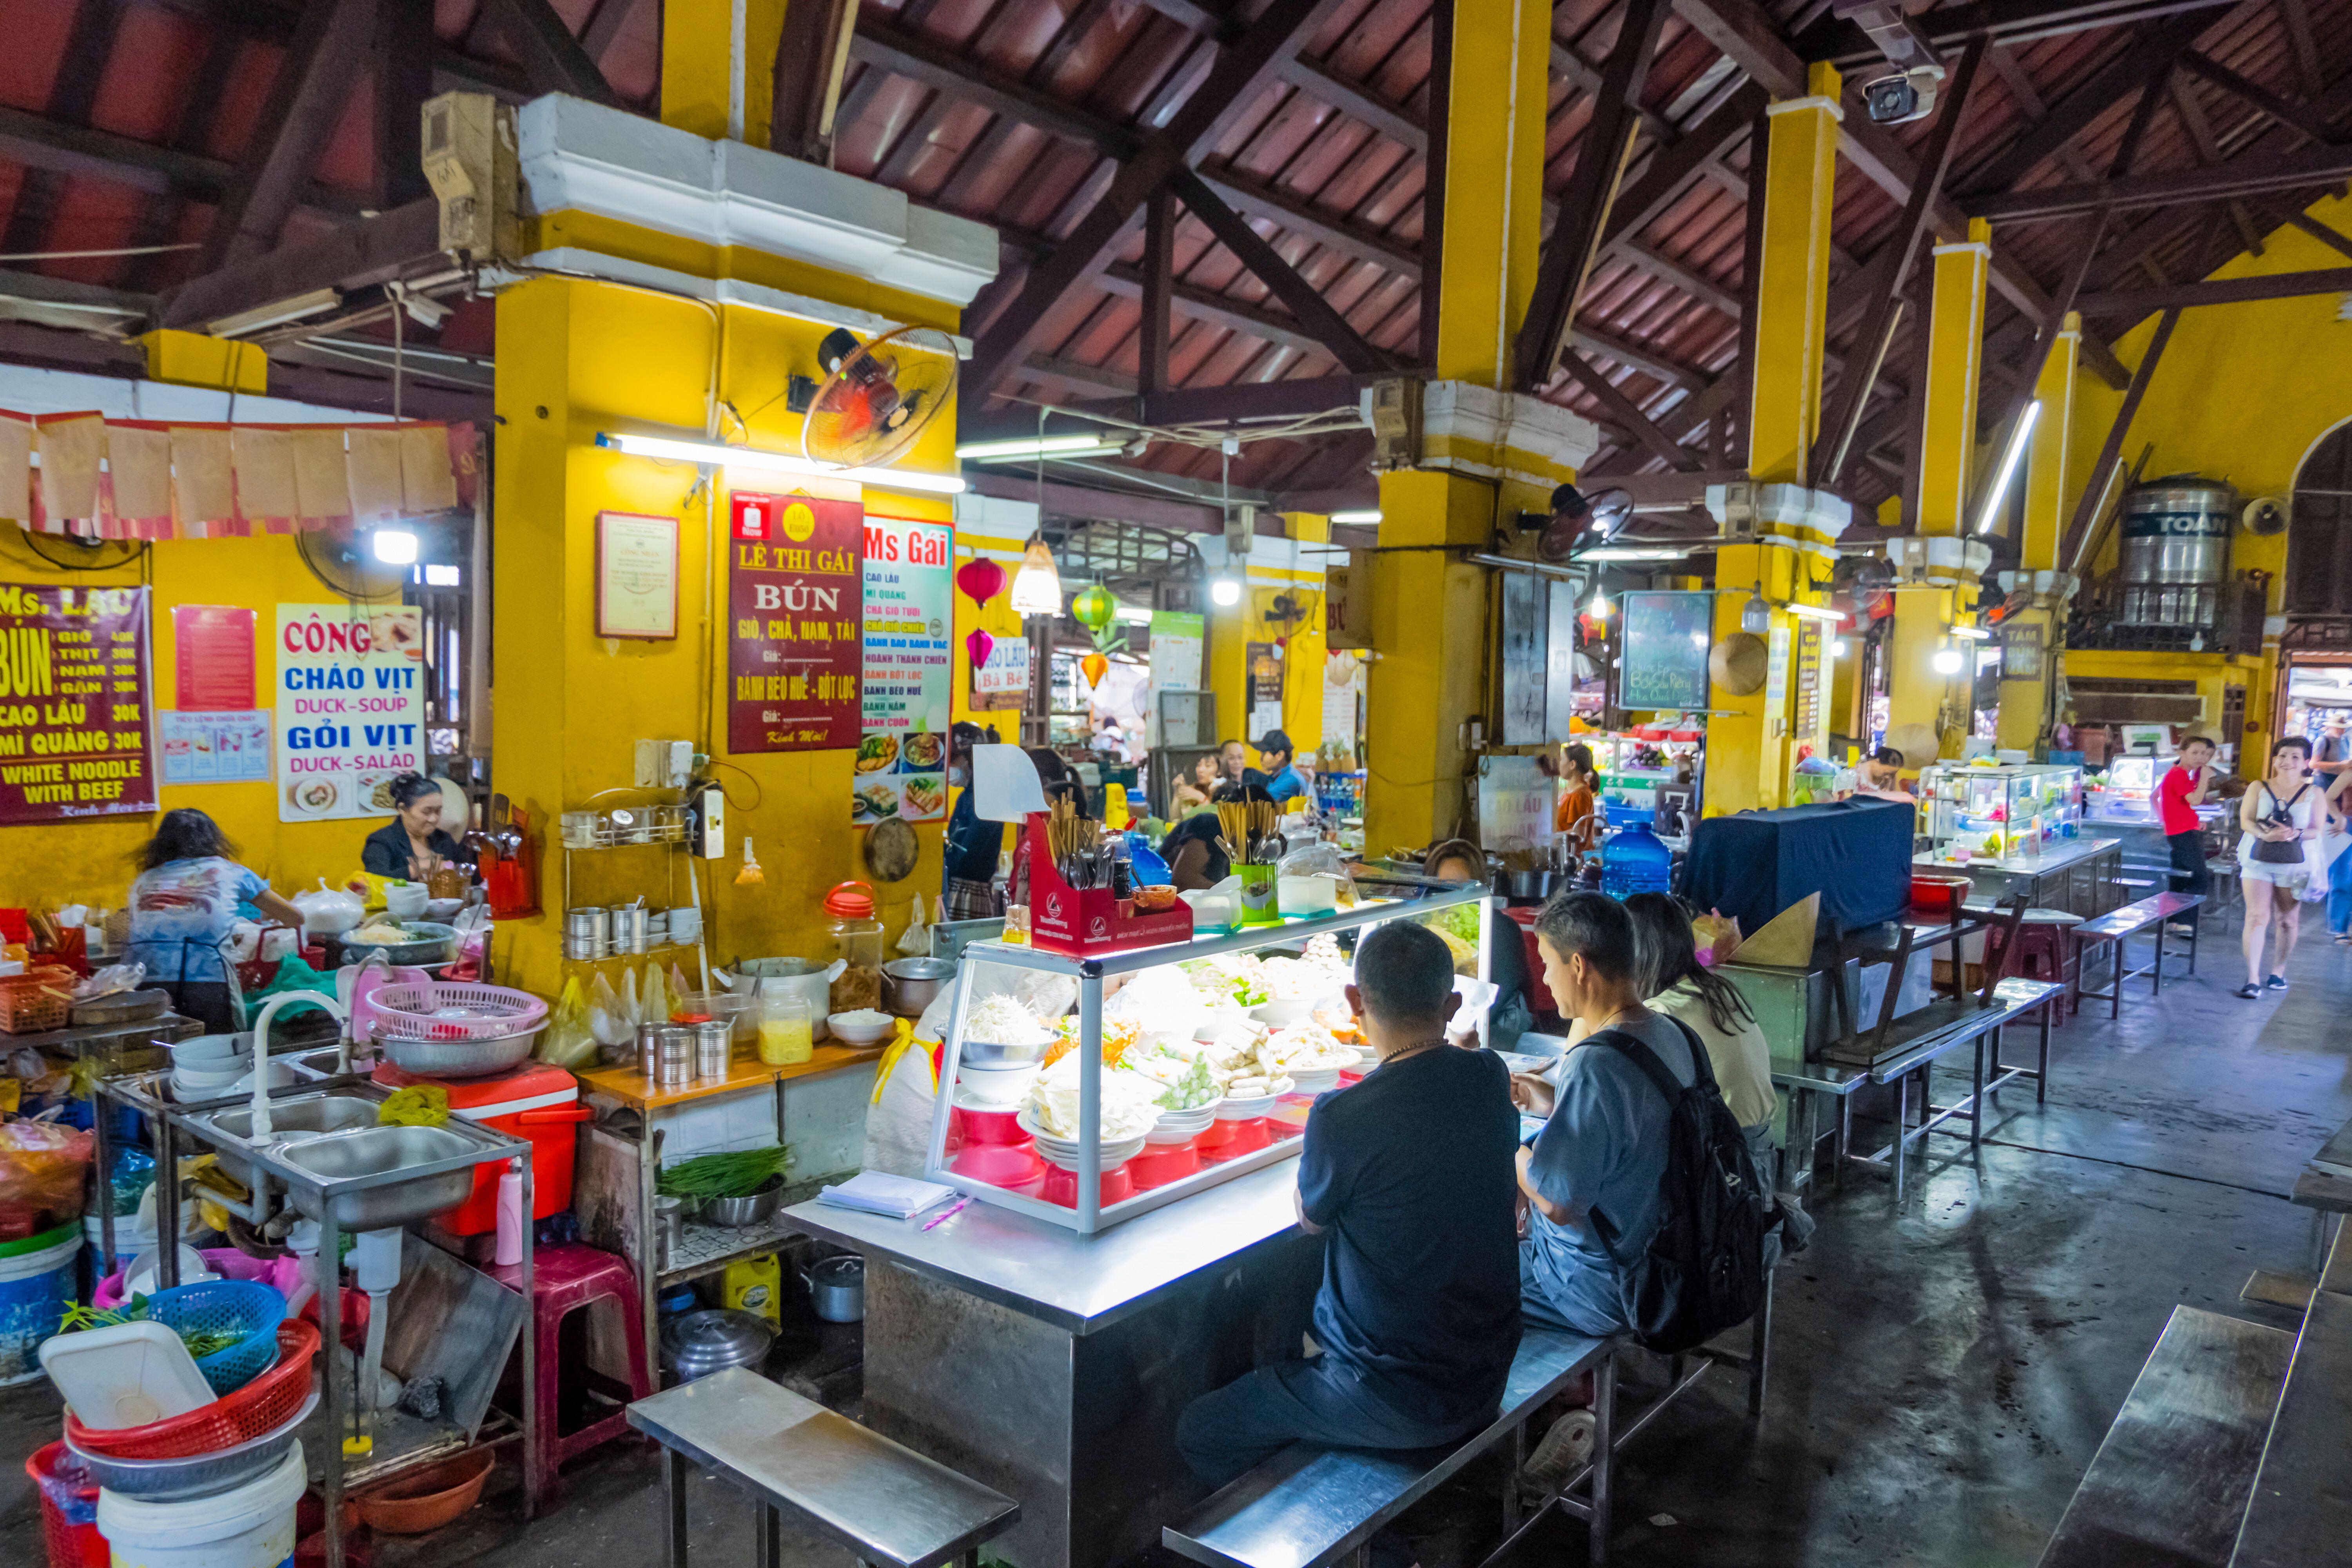 Food court, Cho Hoi An, Central market hall, old town, Hoi An, Vietnam, Asia